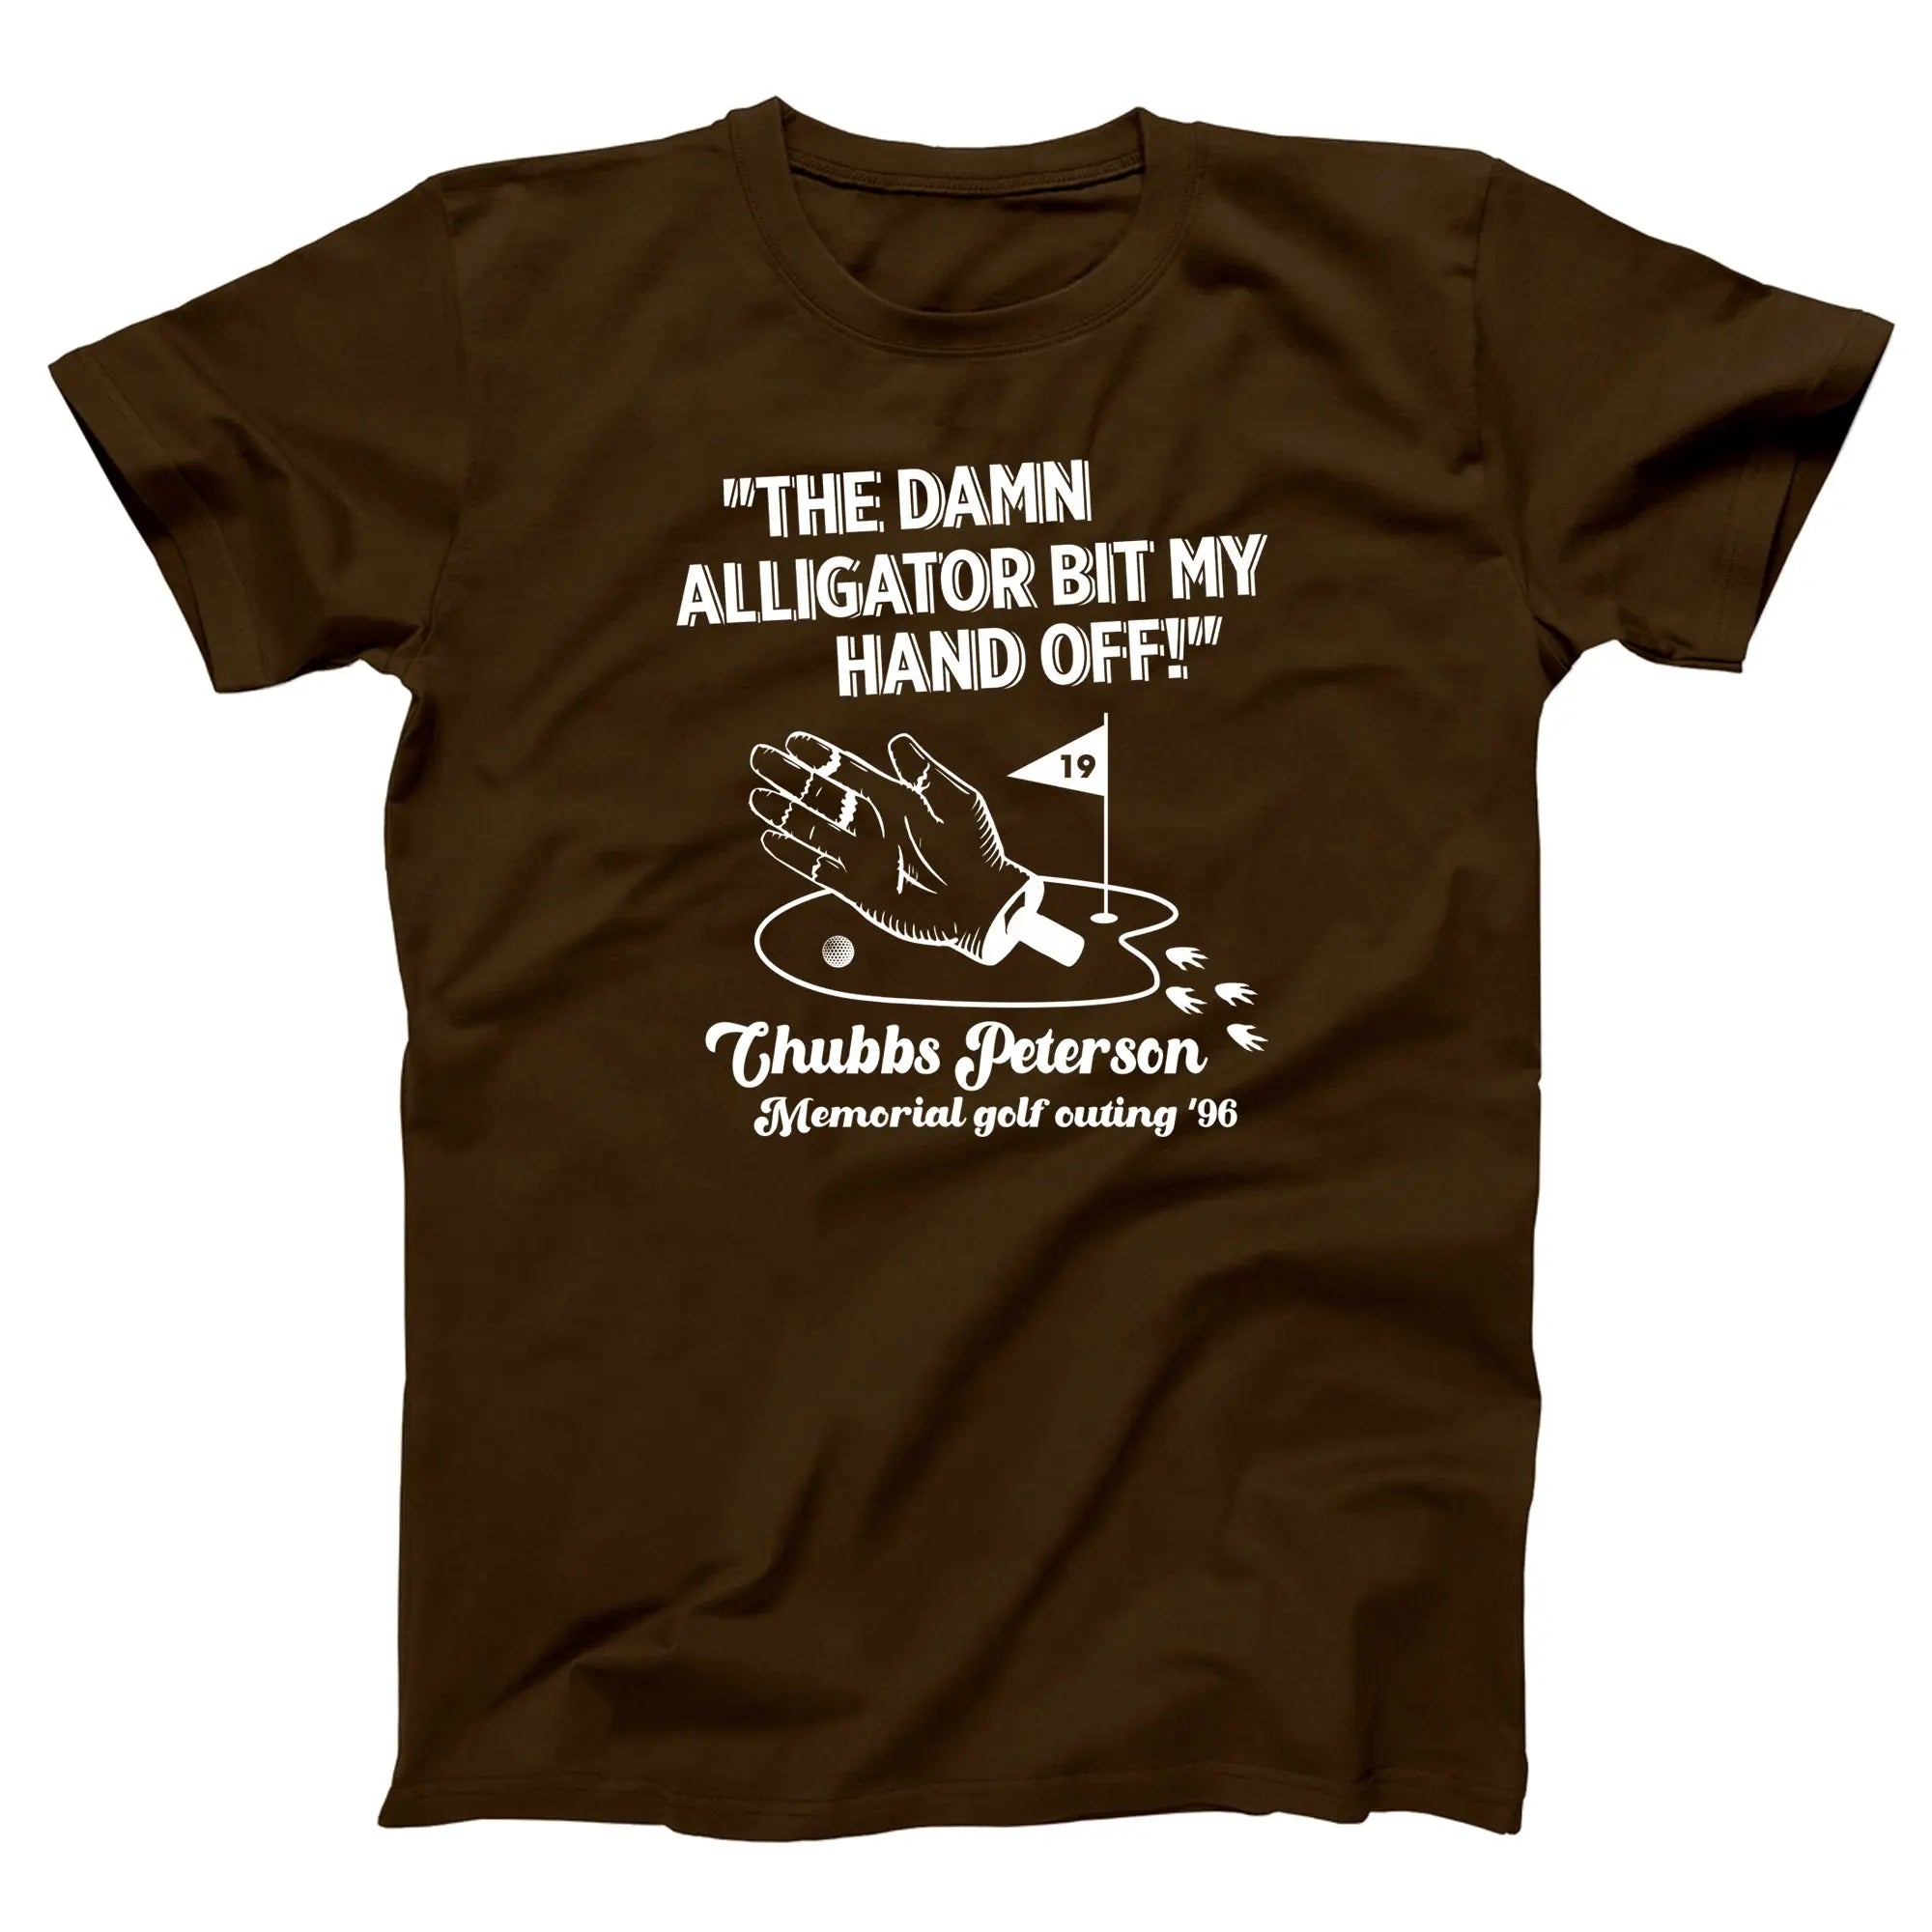 Alligator Bit My Hand Off - Chubbs Peterson Memorial 96 Tshirt - Donkey Tees